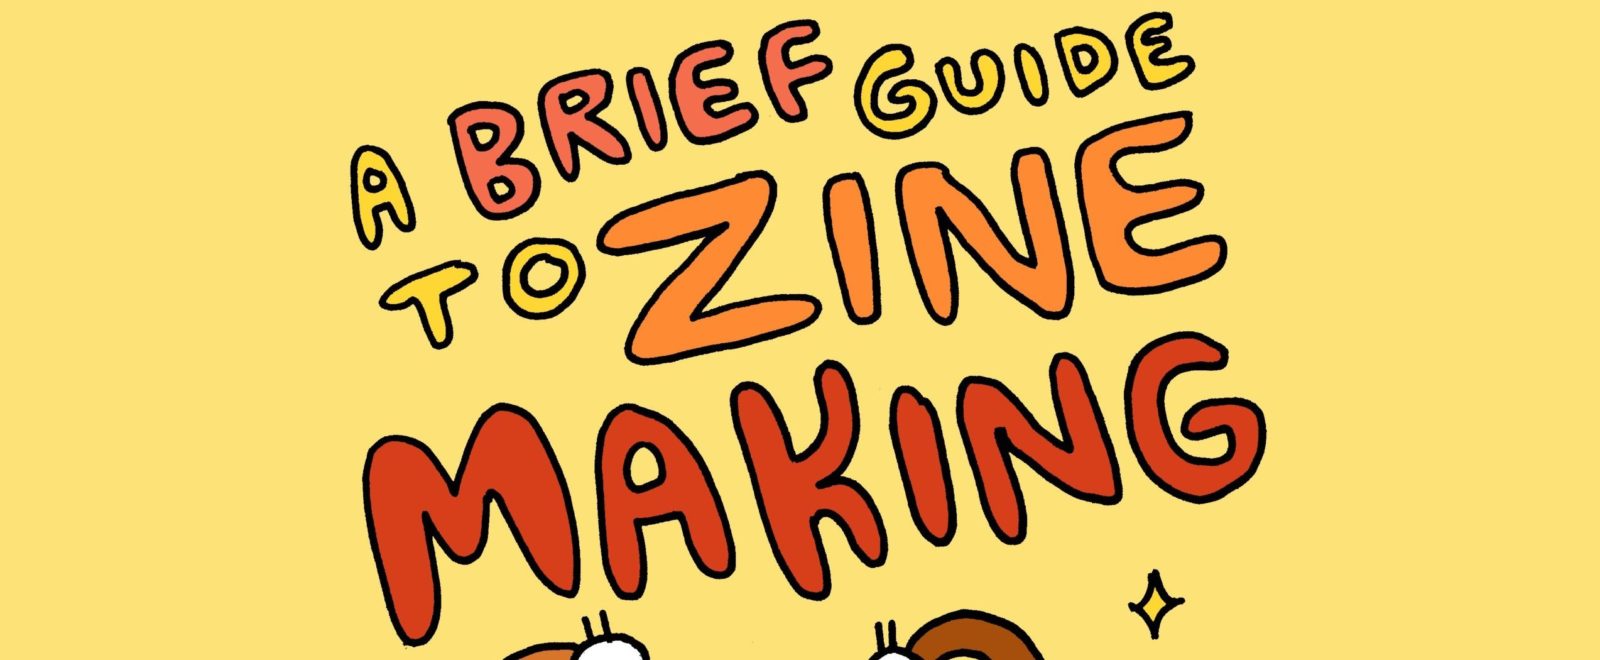 Brief_Guide_to_zine_making_edit